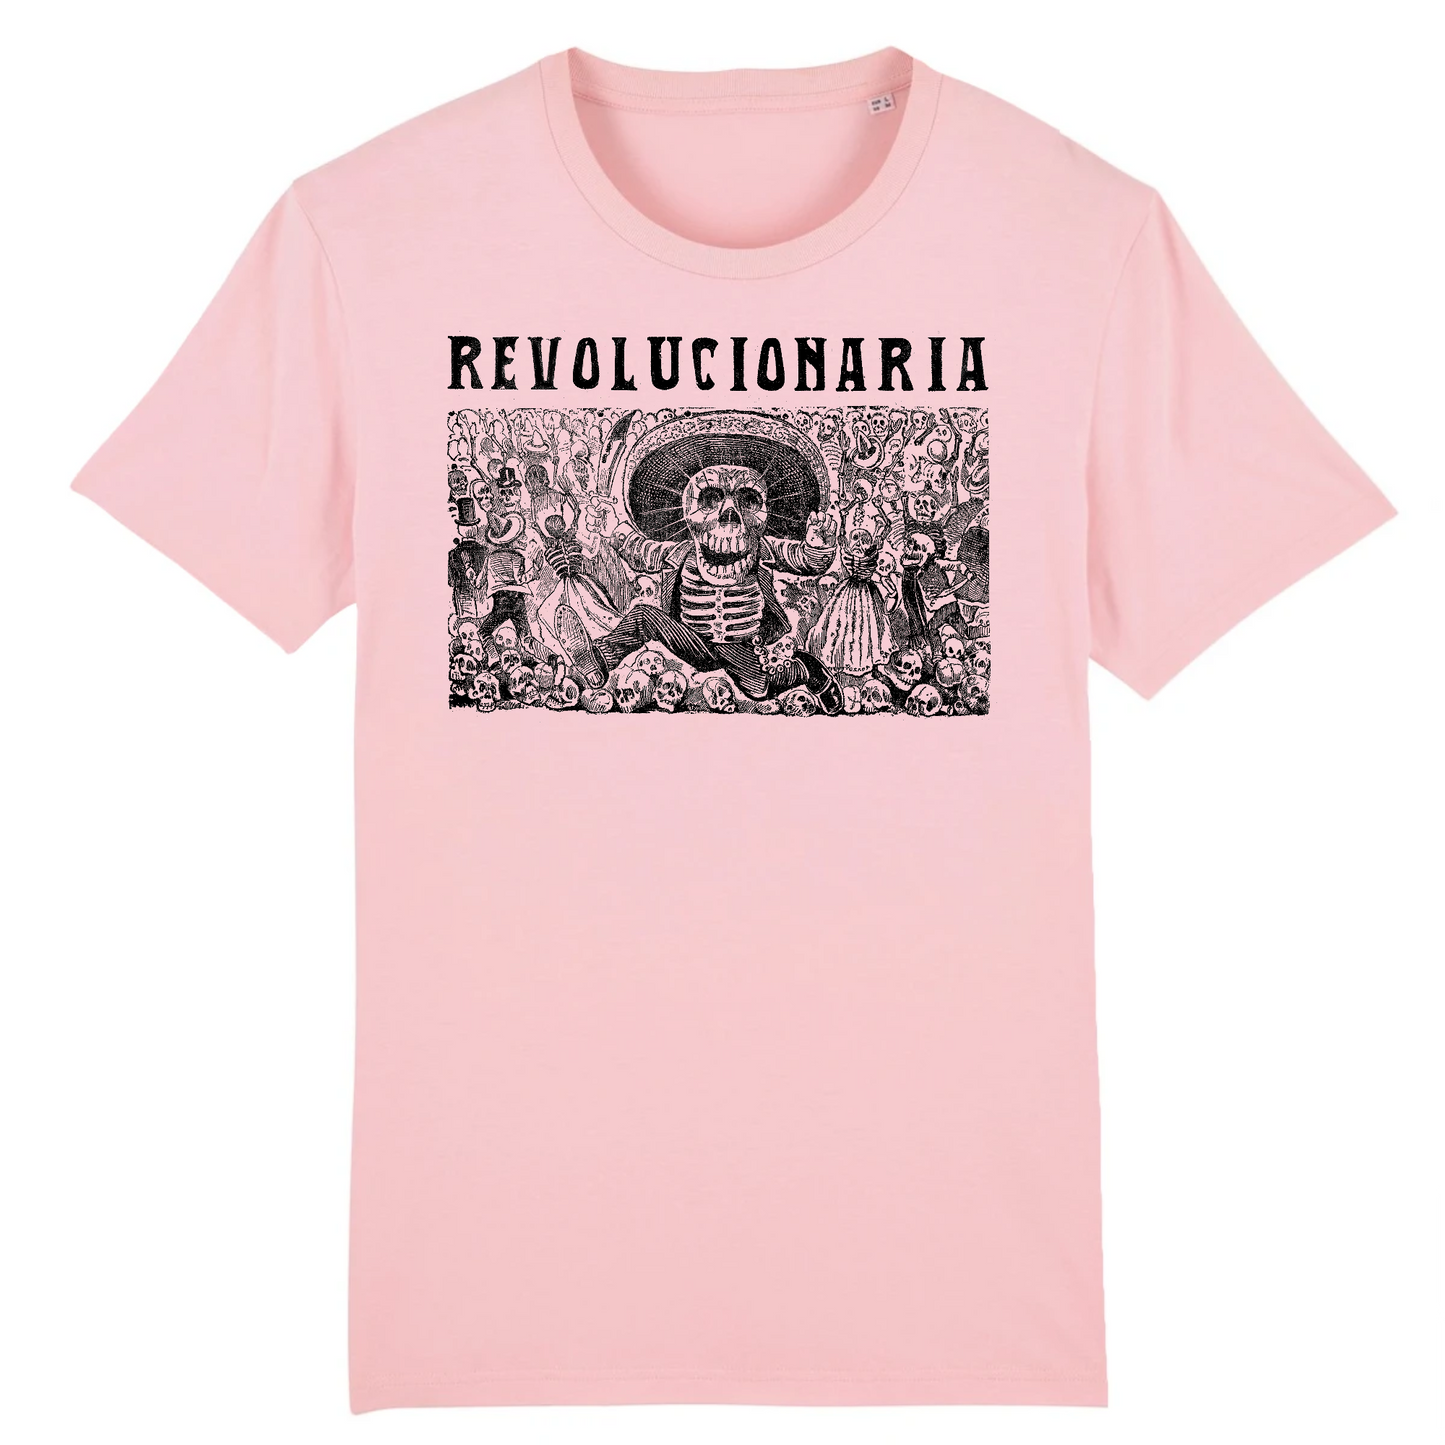 Calavera Revolutionaria - T-shirt en coton biologique